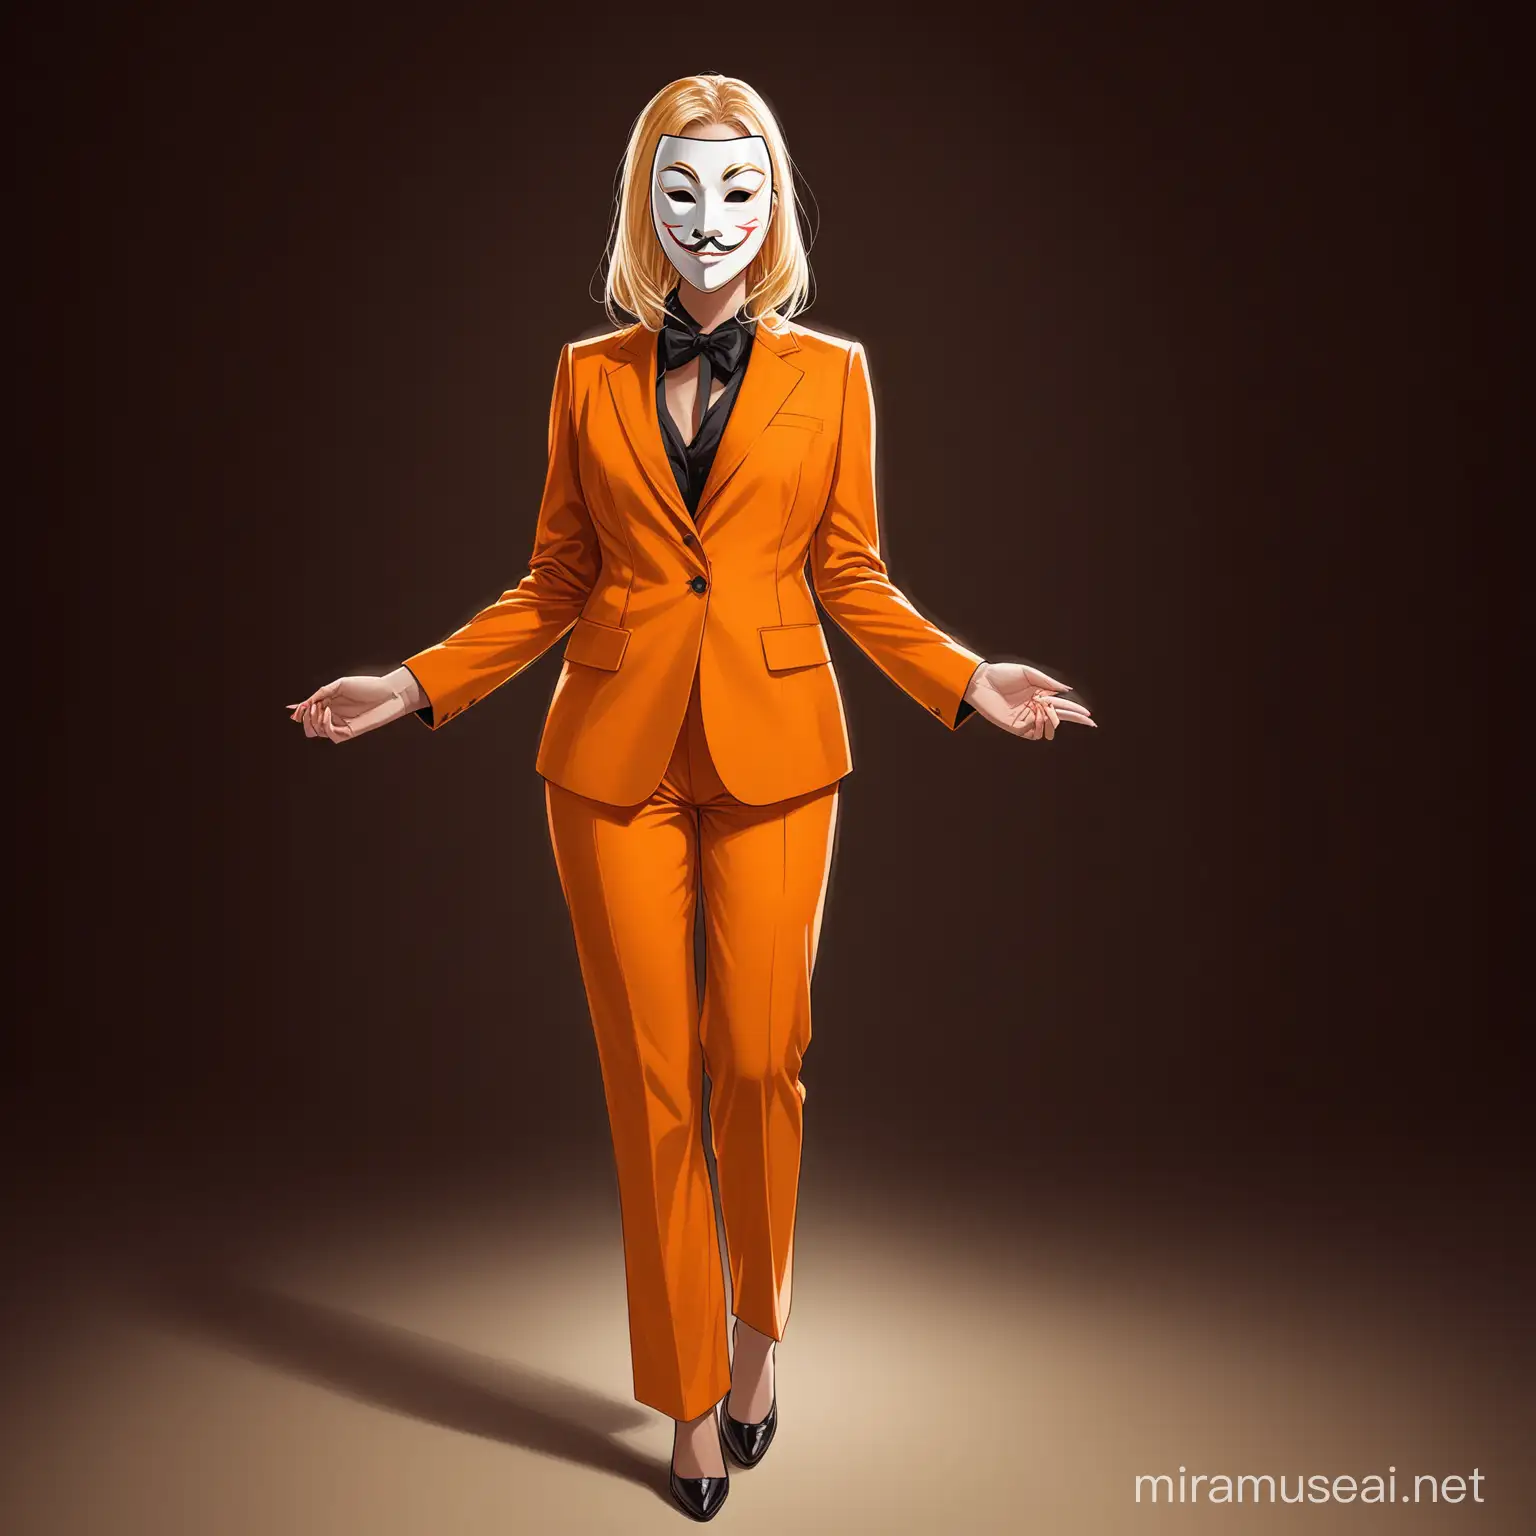 Blonde Woman in Orange Suit Wearing Theater Mask